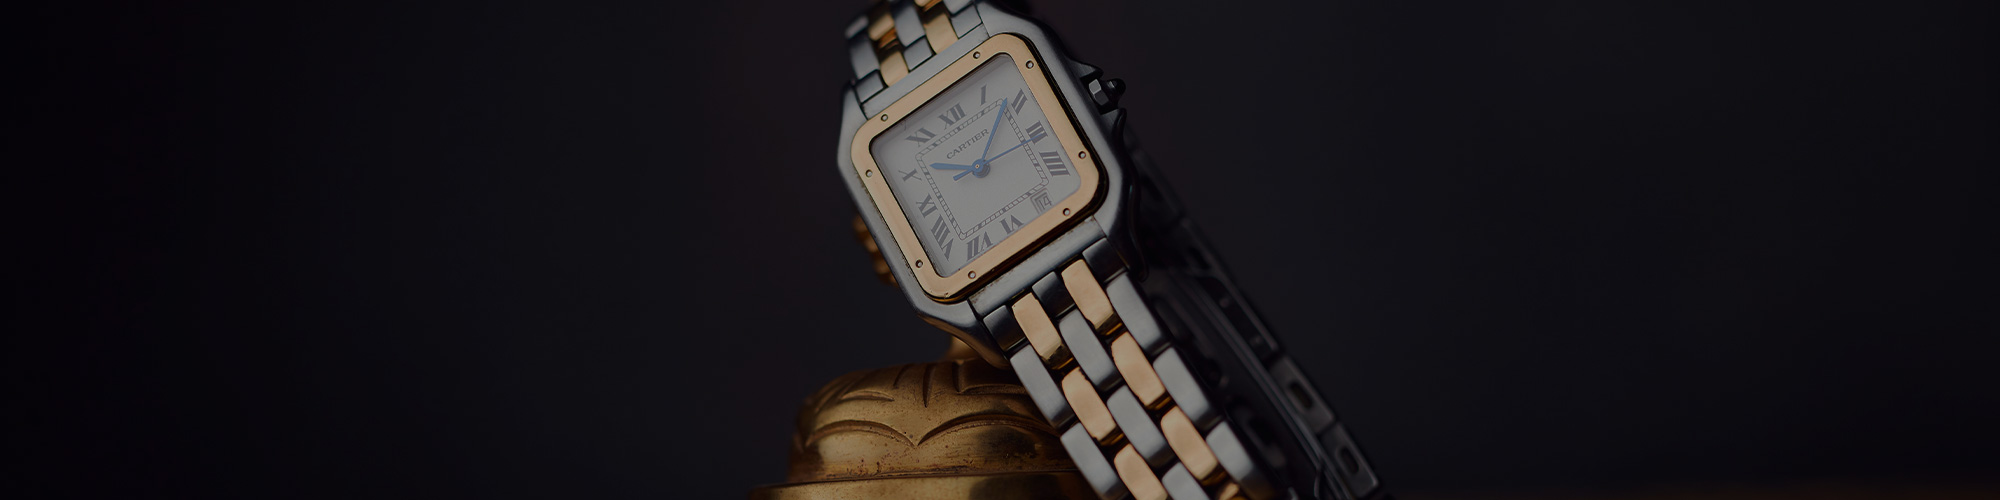 Cartier Watch Valuations